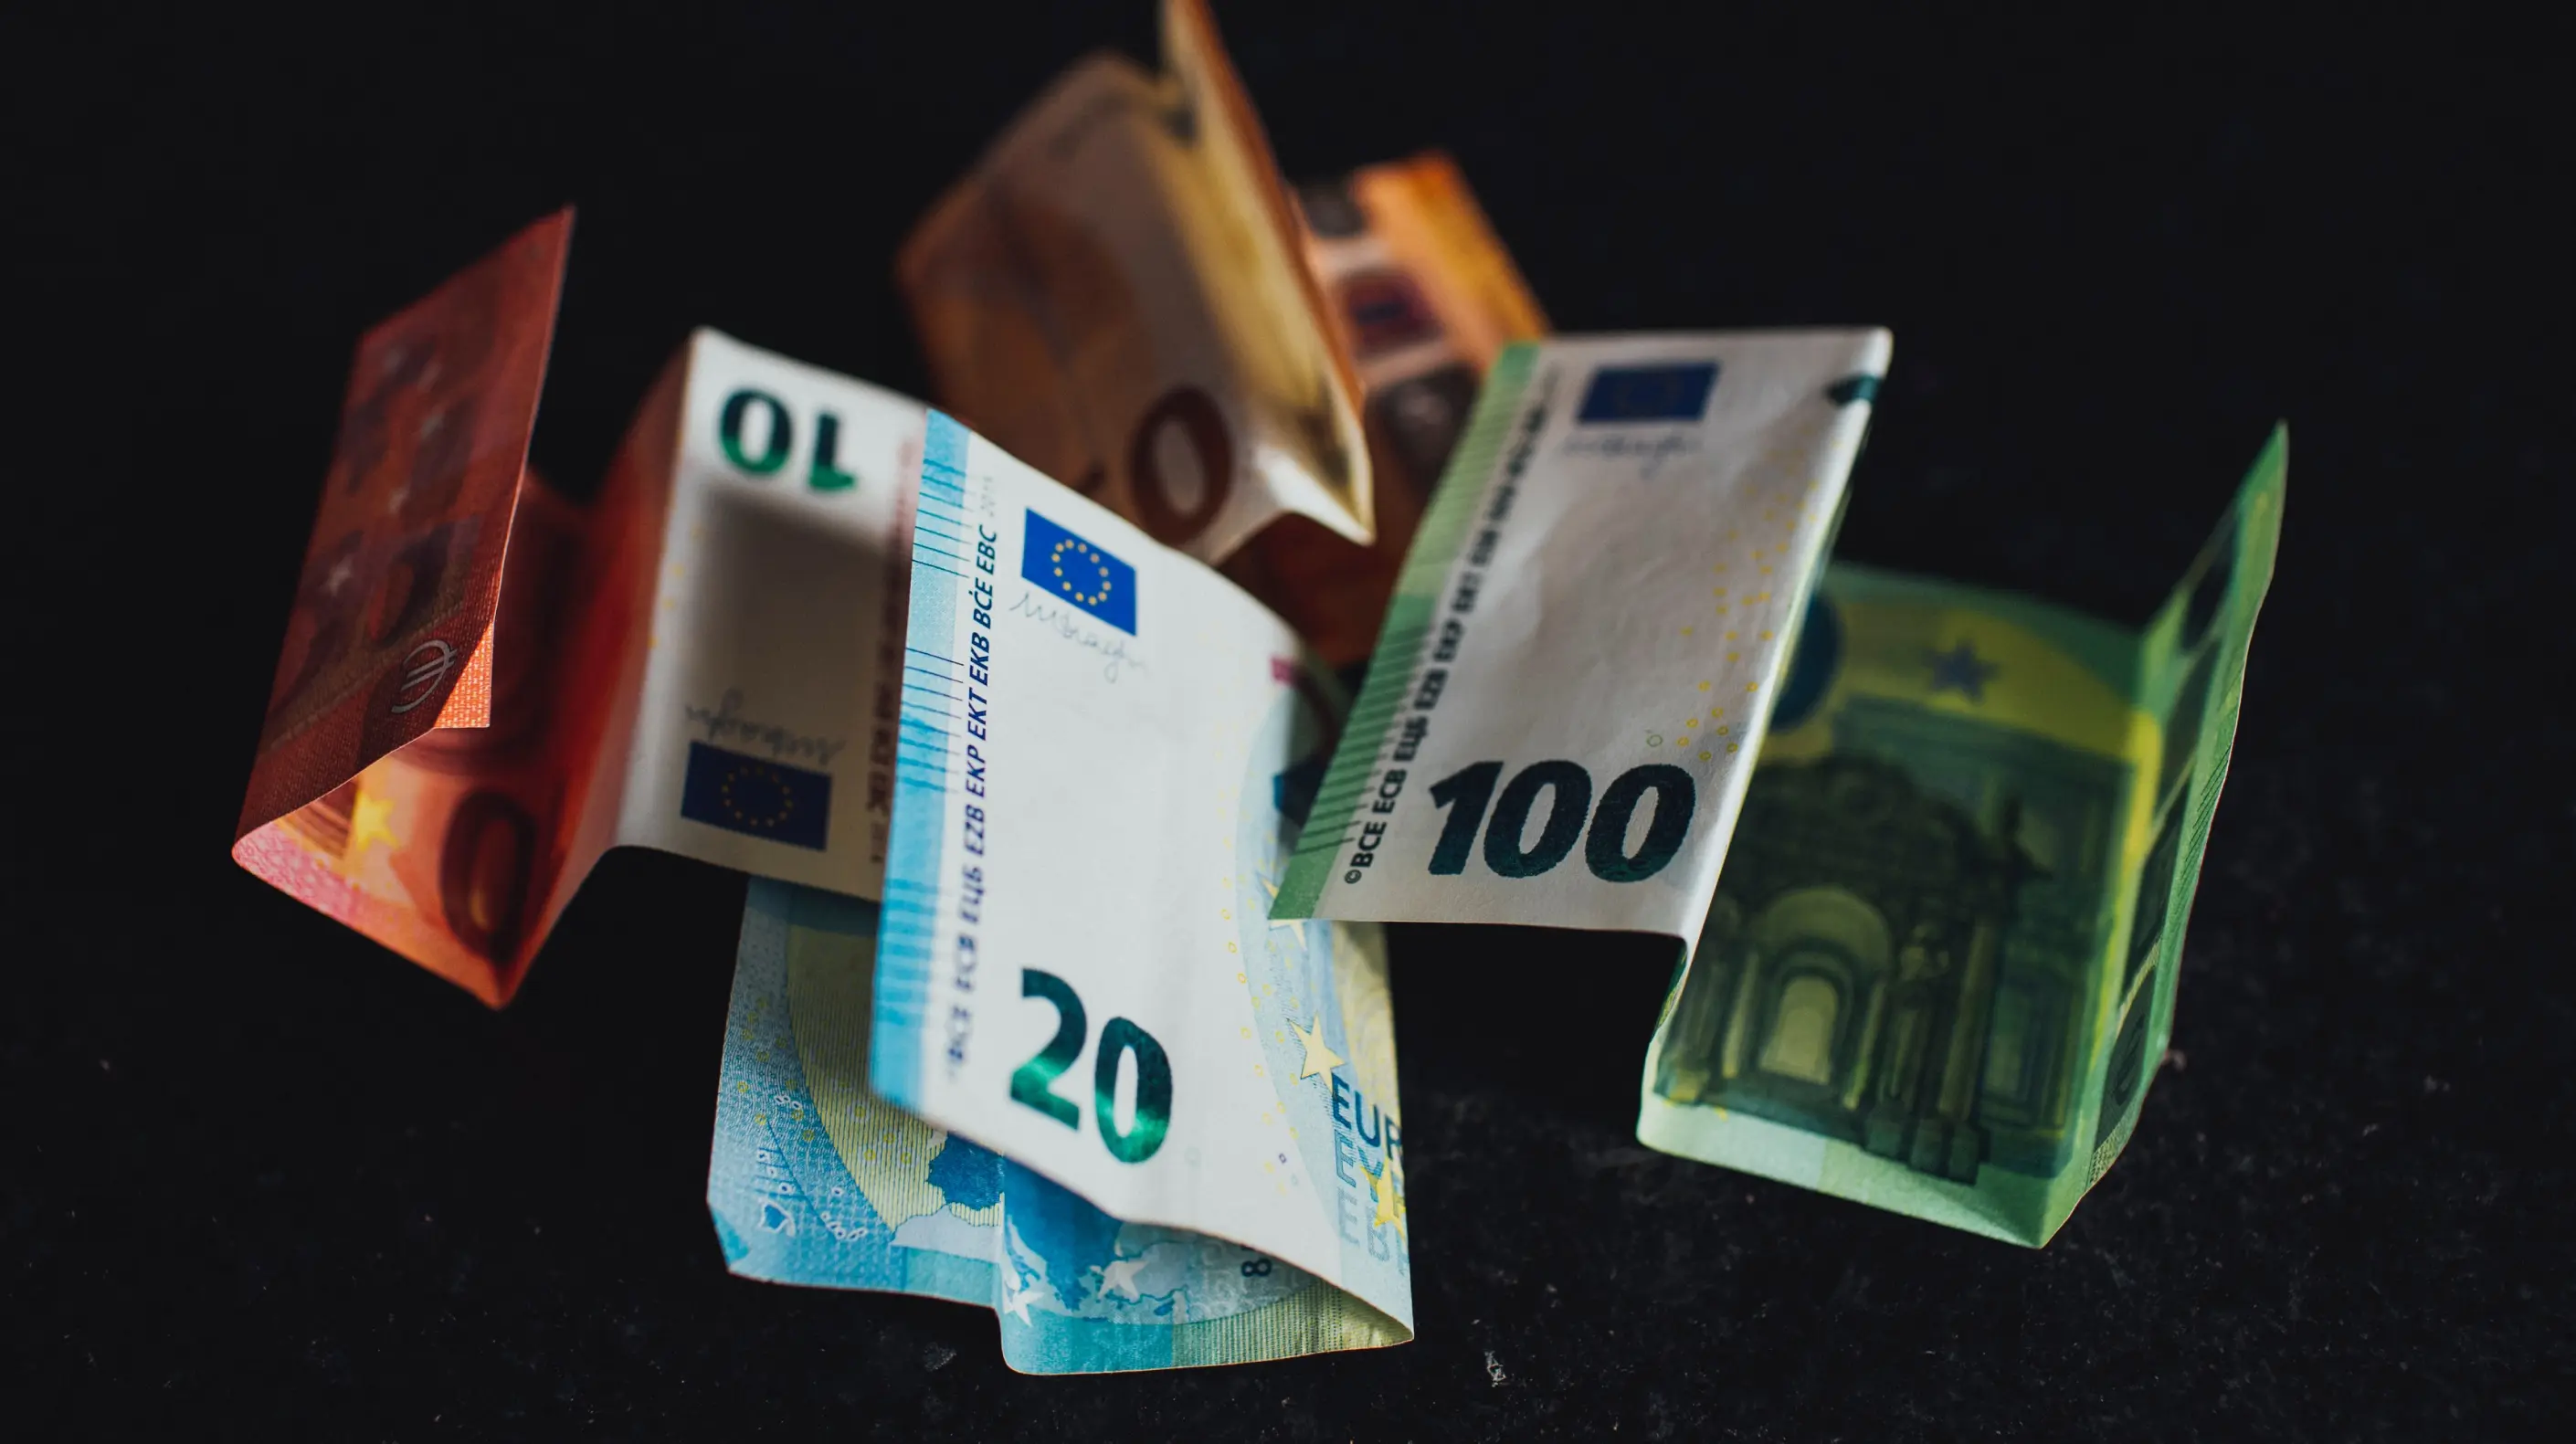 Euro biljetten boven blog over boete onjuiste kilometeradministratie